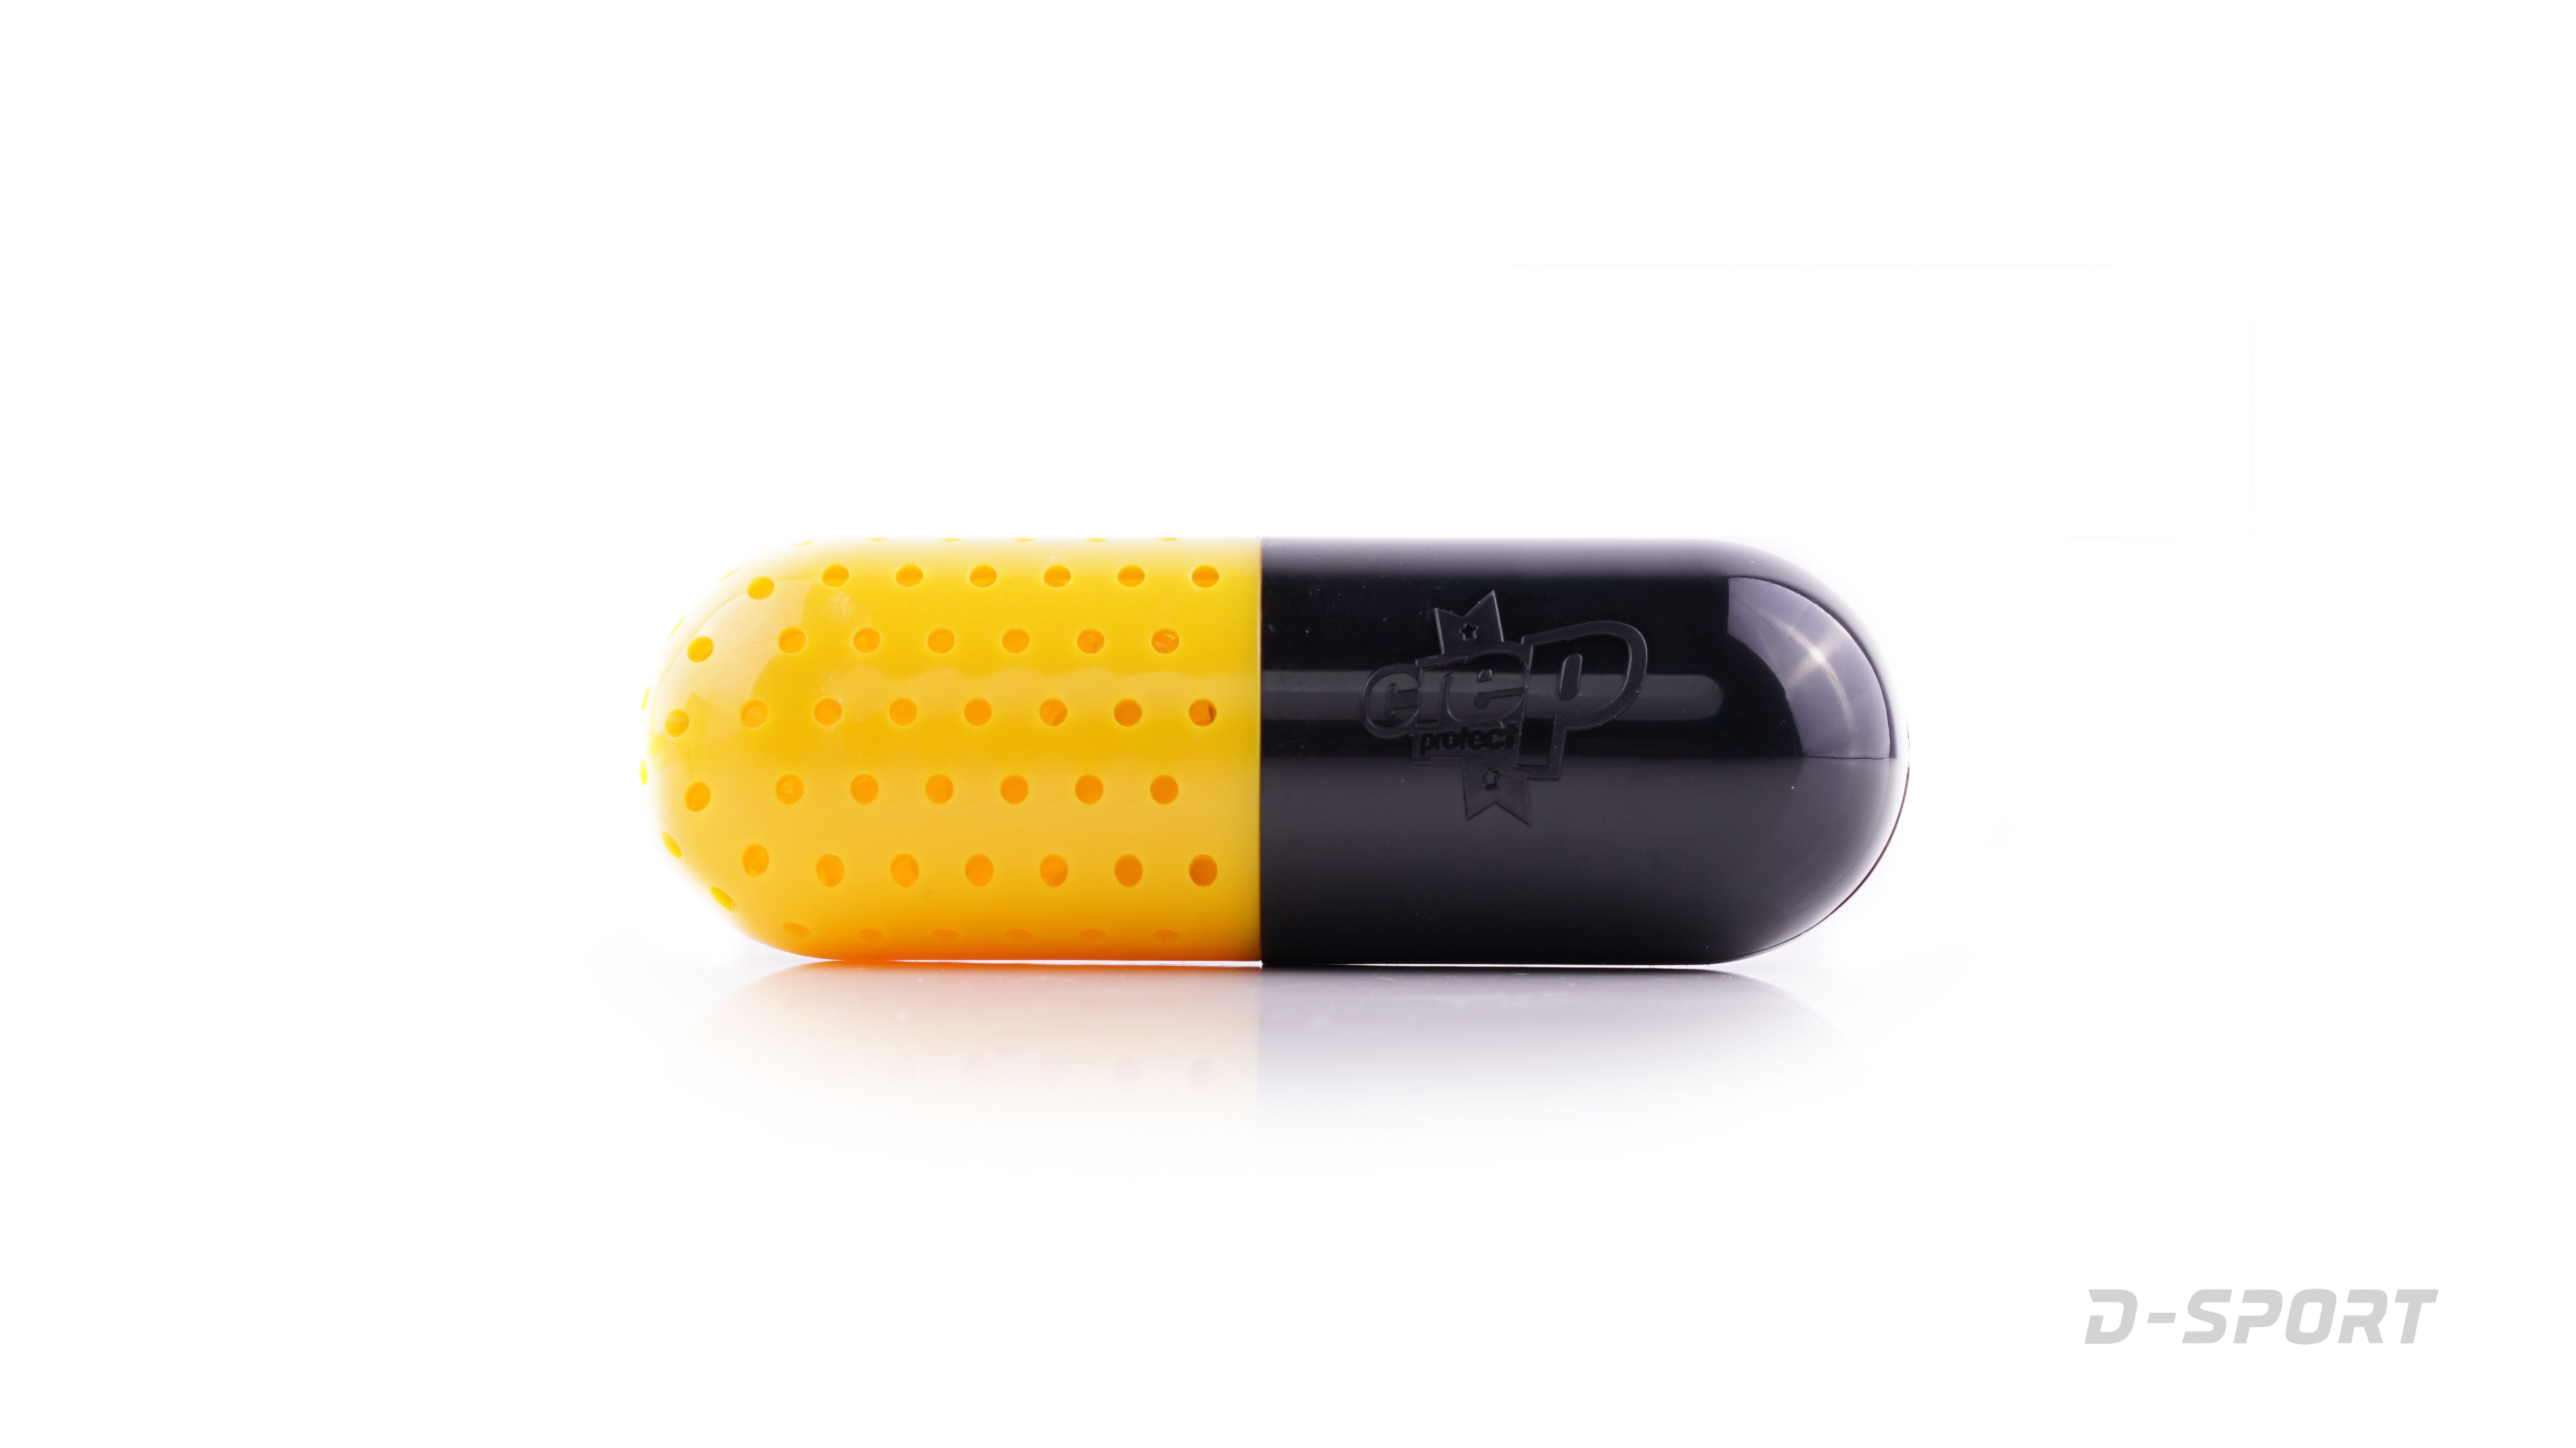 Crep Protect Pills Black/ Yellow